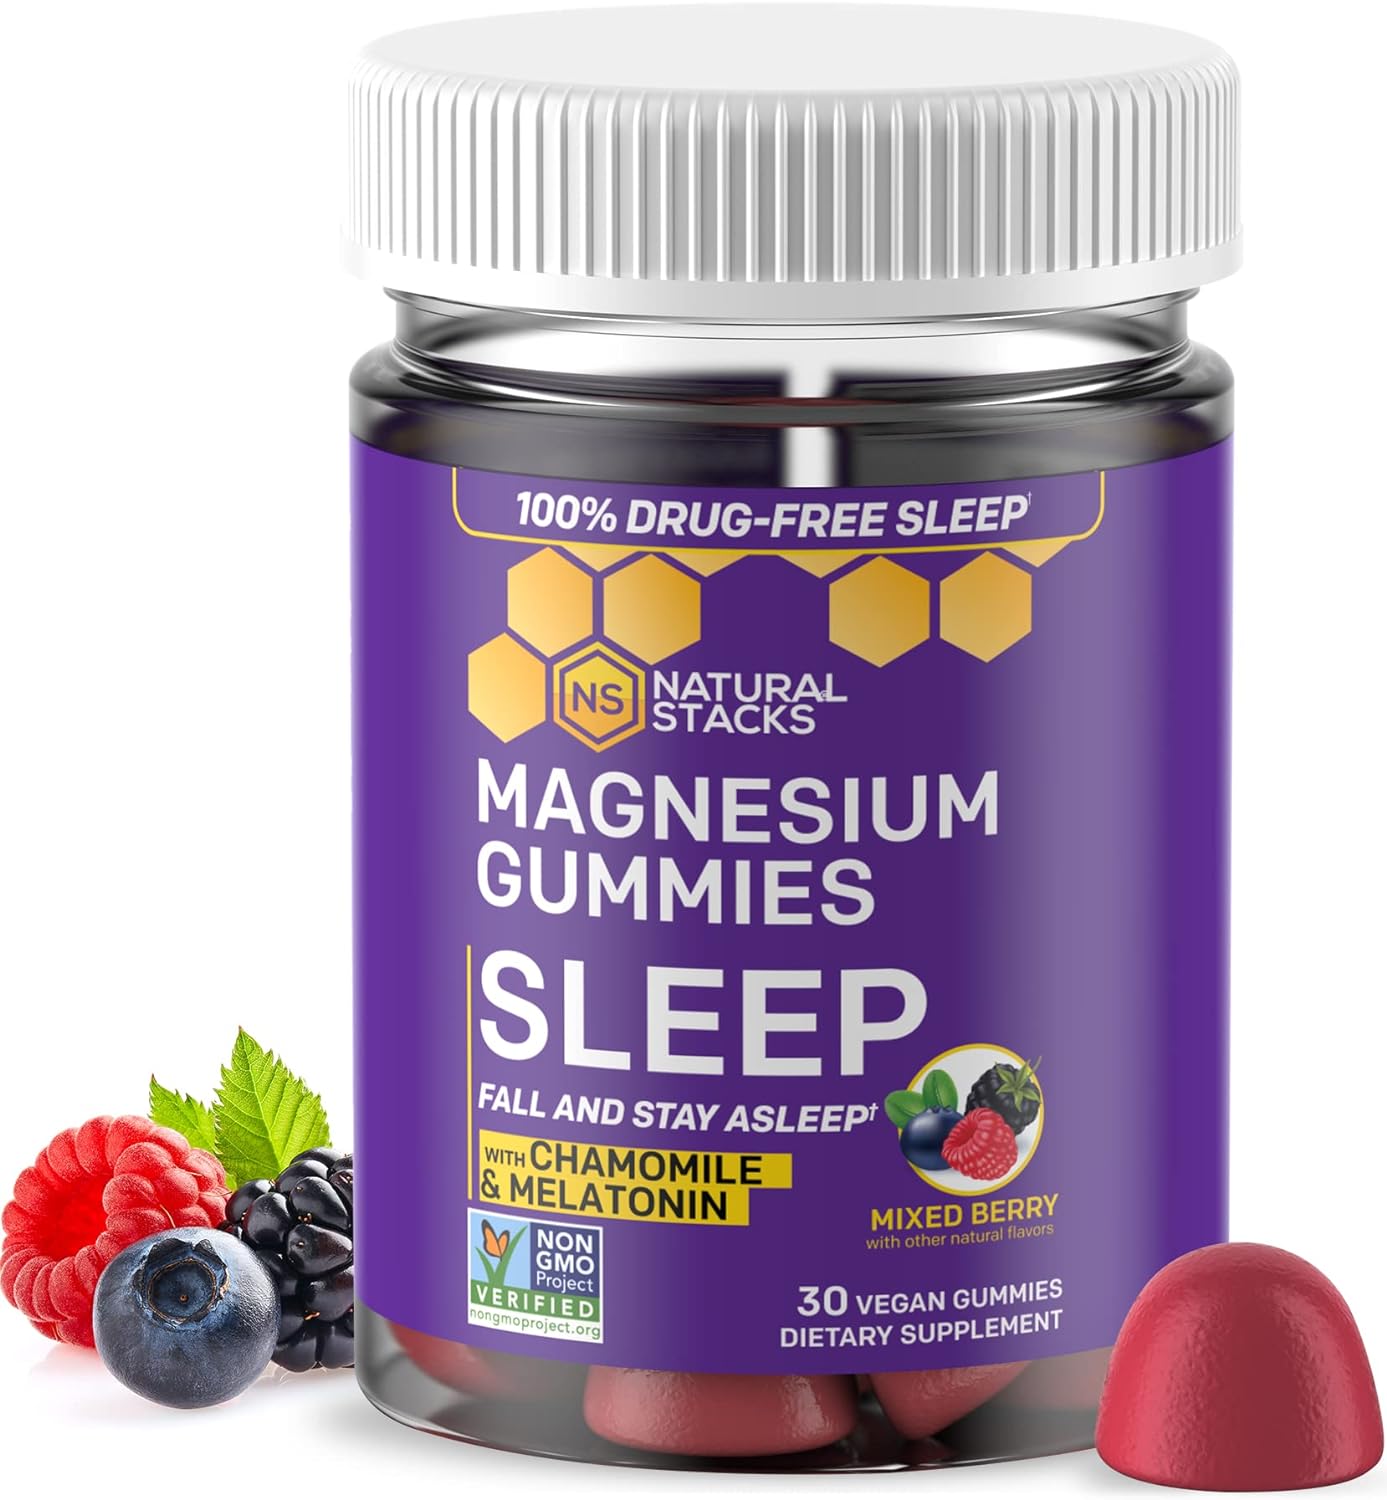 Natural Stacks Sleep Magnesium Gummies - Premium Drug Free Sleep Aid with Melatonin - Magnesium Citrate Gummies for Sleep Quality - Magnesium Gummies for Adults with Chamomile - 30 Mixed Berry Gummies